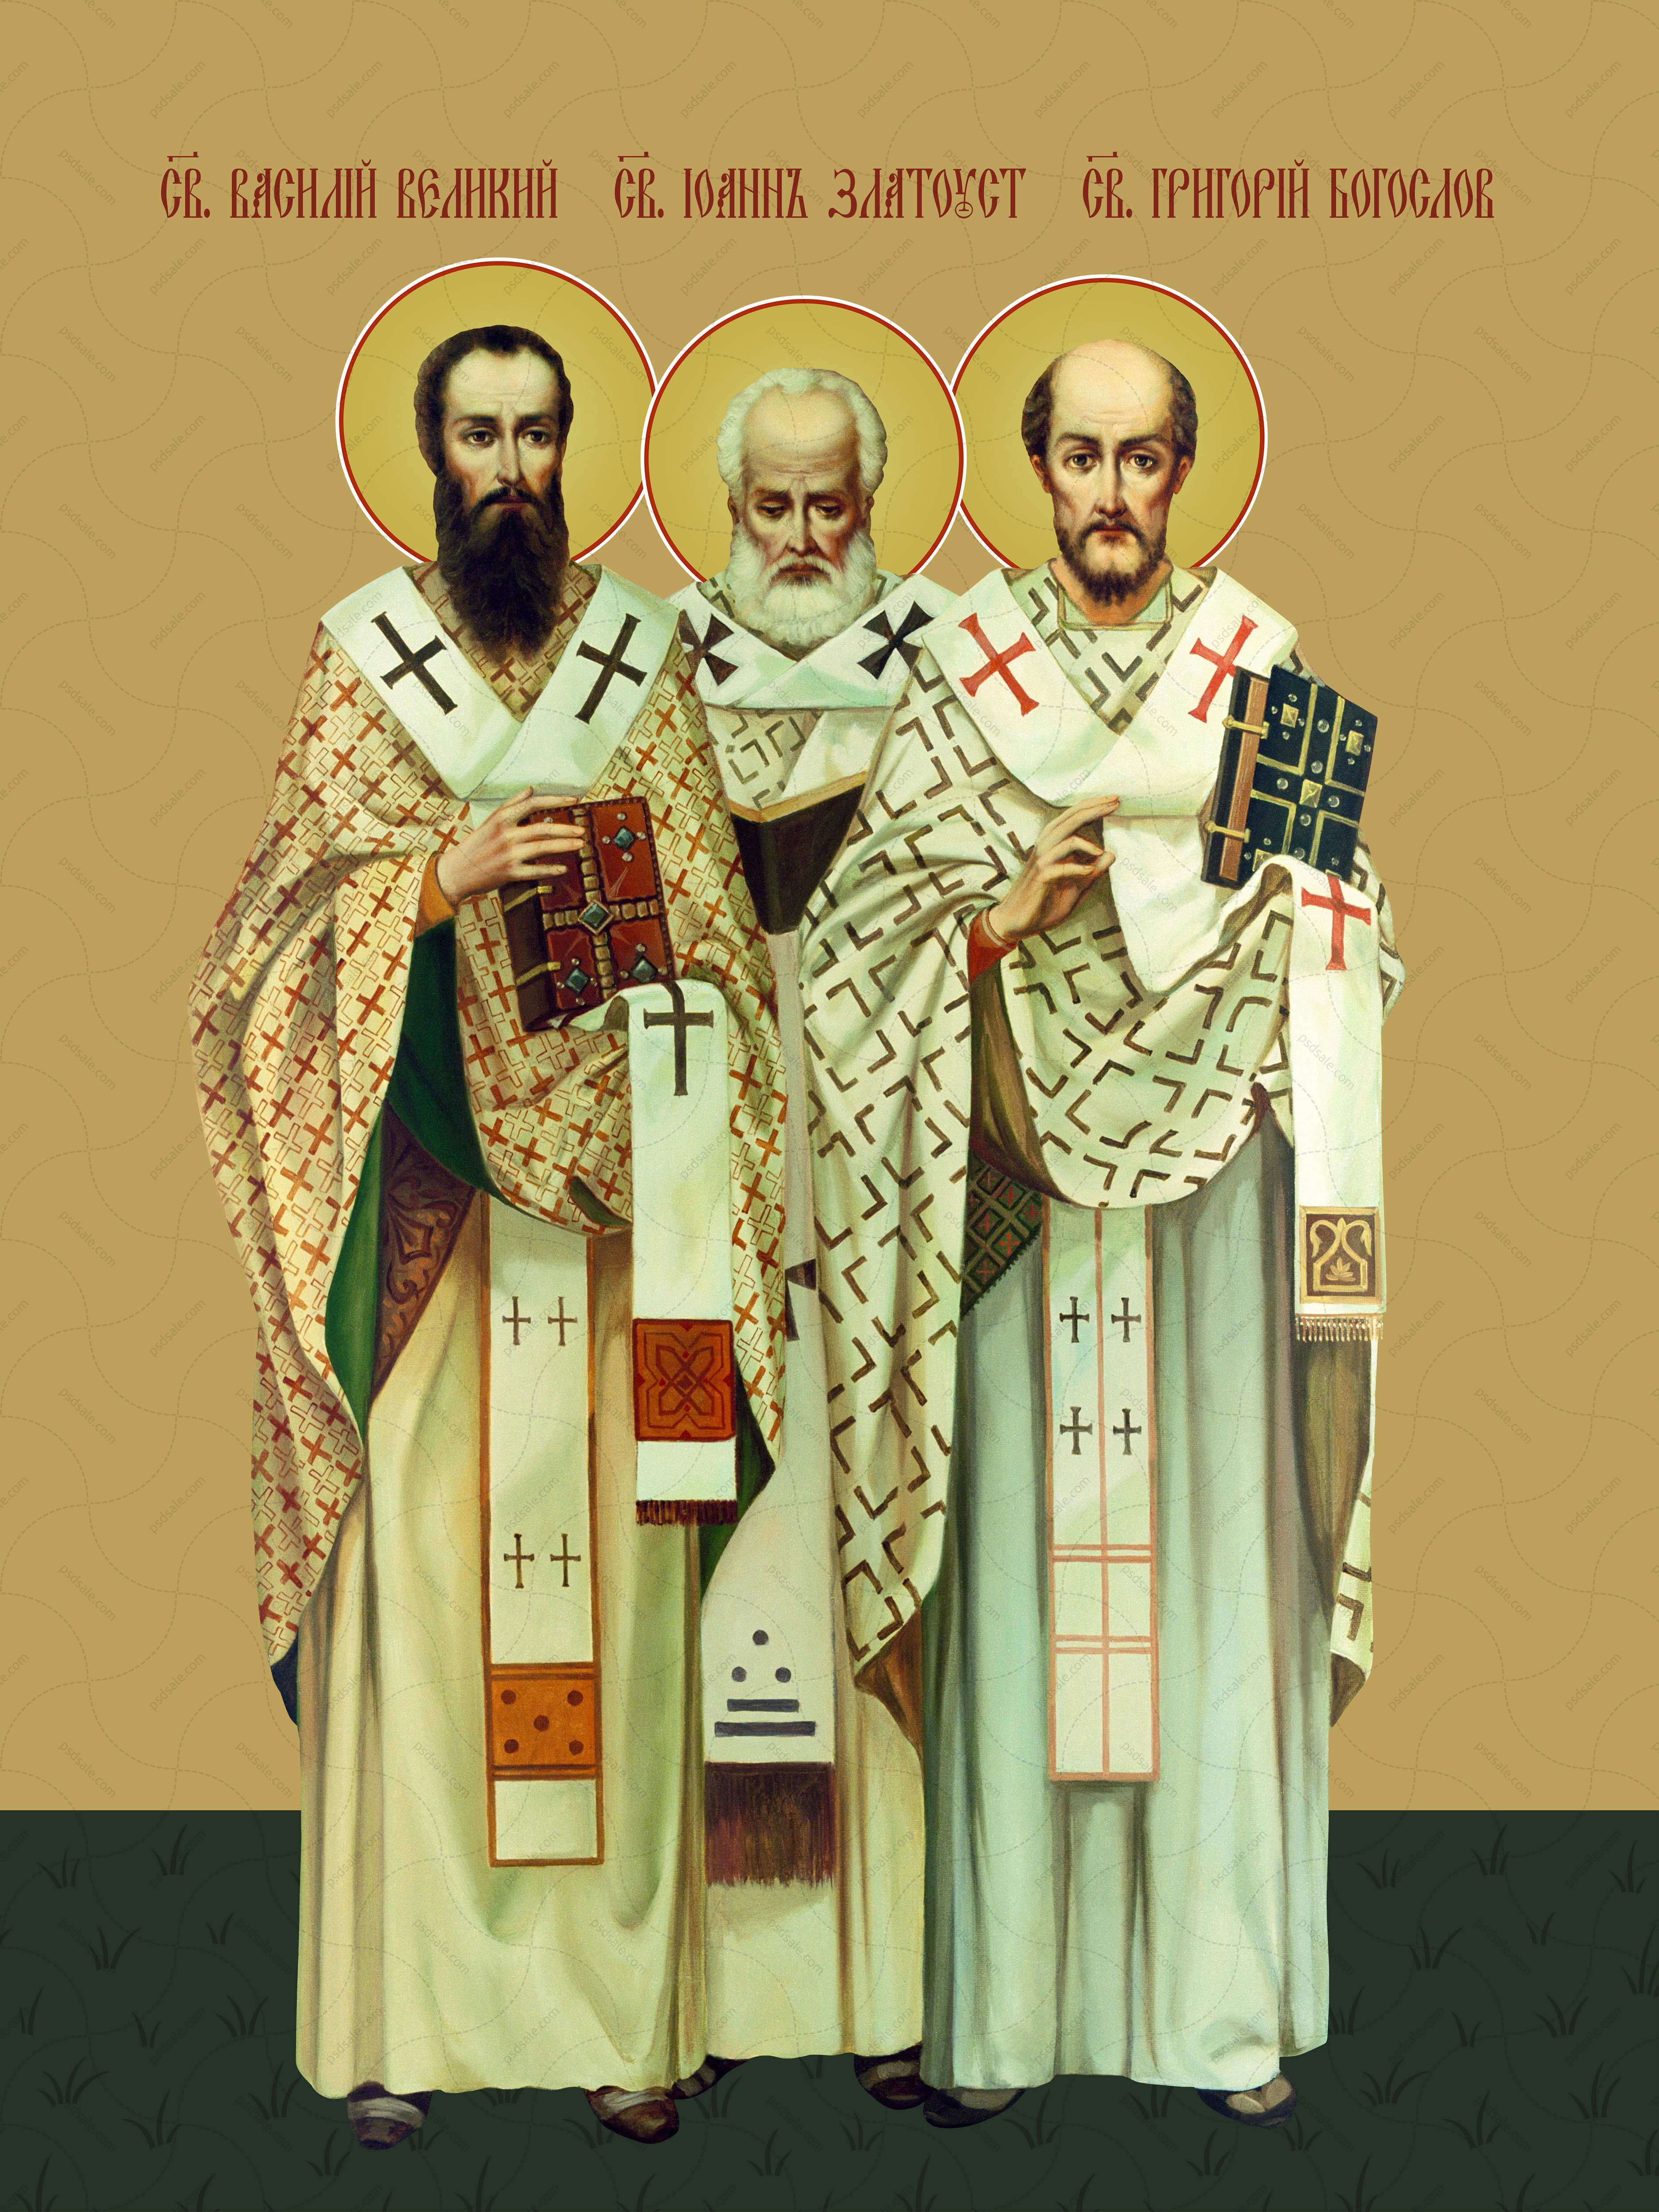 Basil the Great, John Chrysostom, Gregory the Theologian